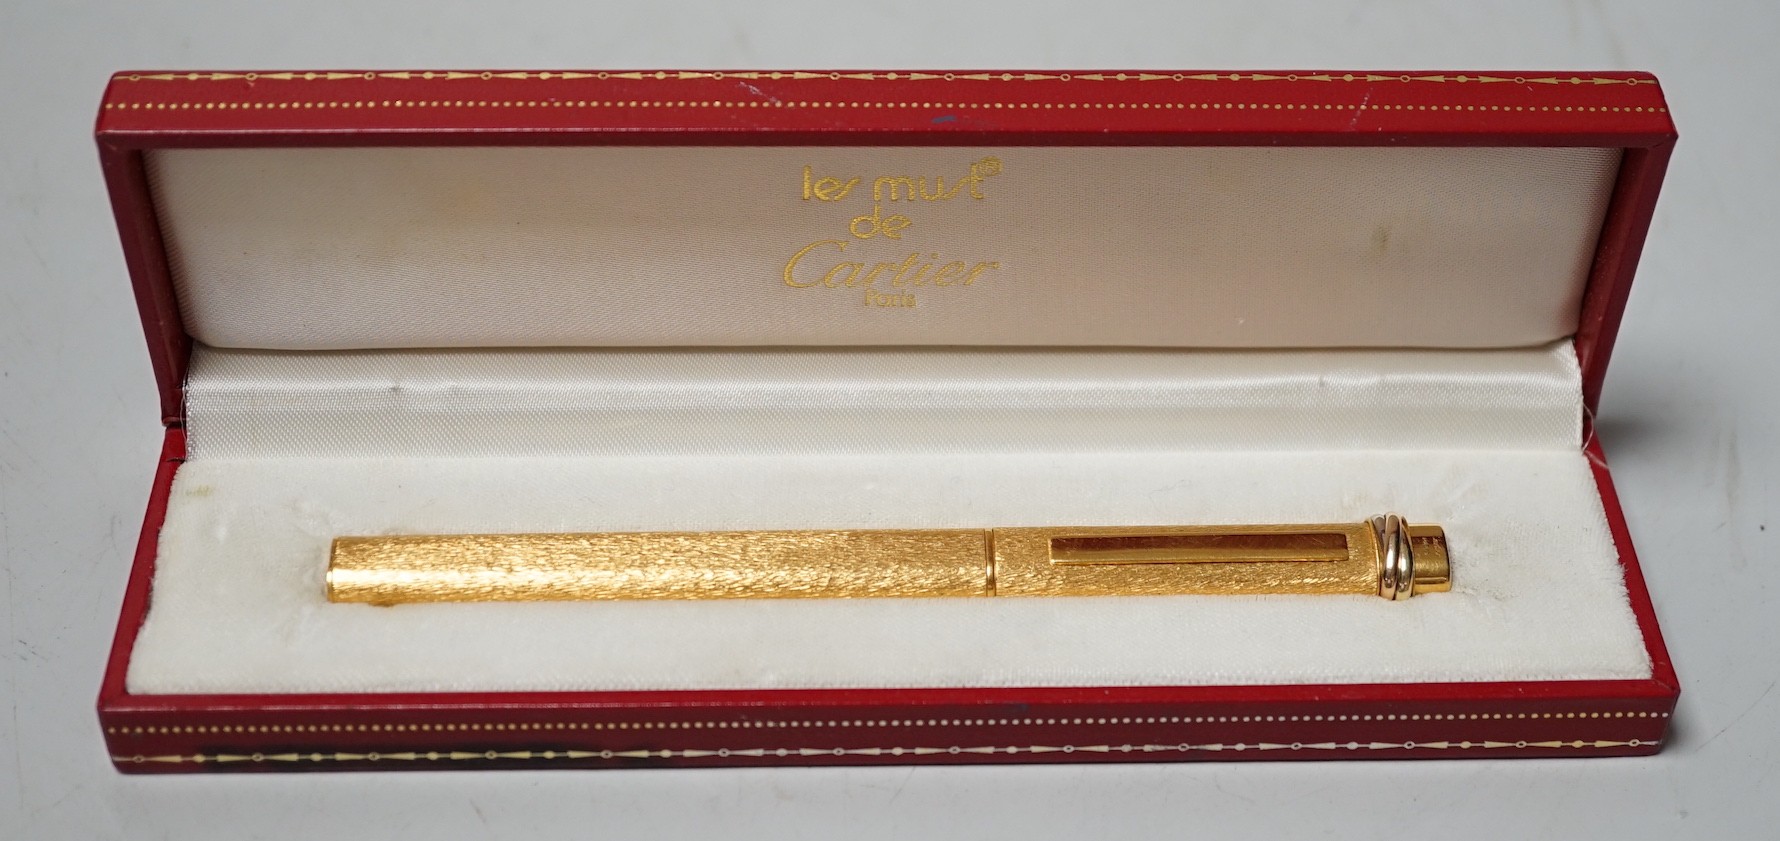 A boxed Must De Cartier ballpoint pen                                                                                                                                                                                       